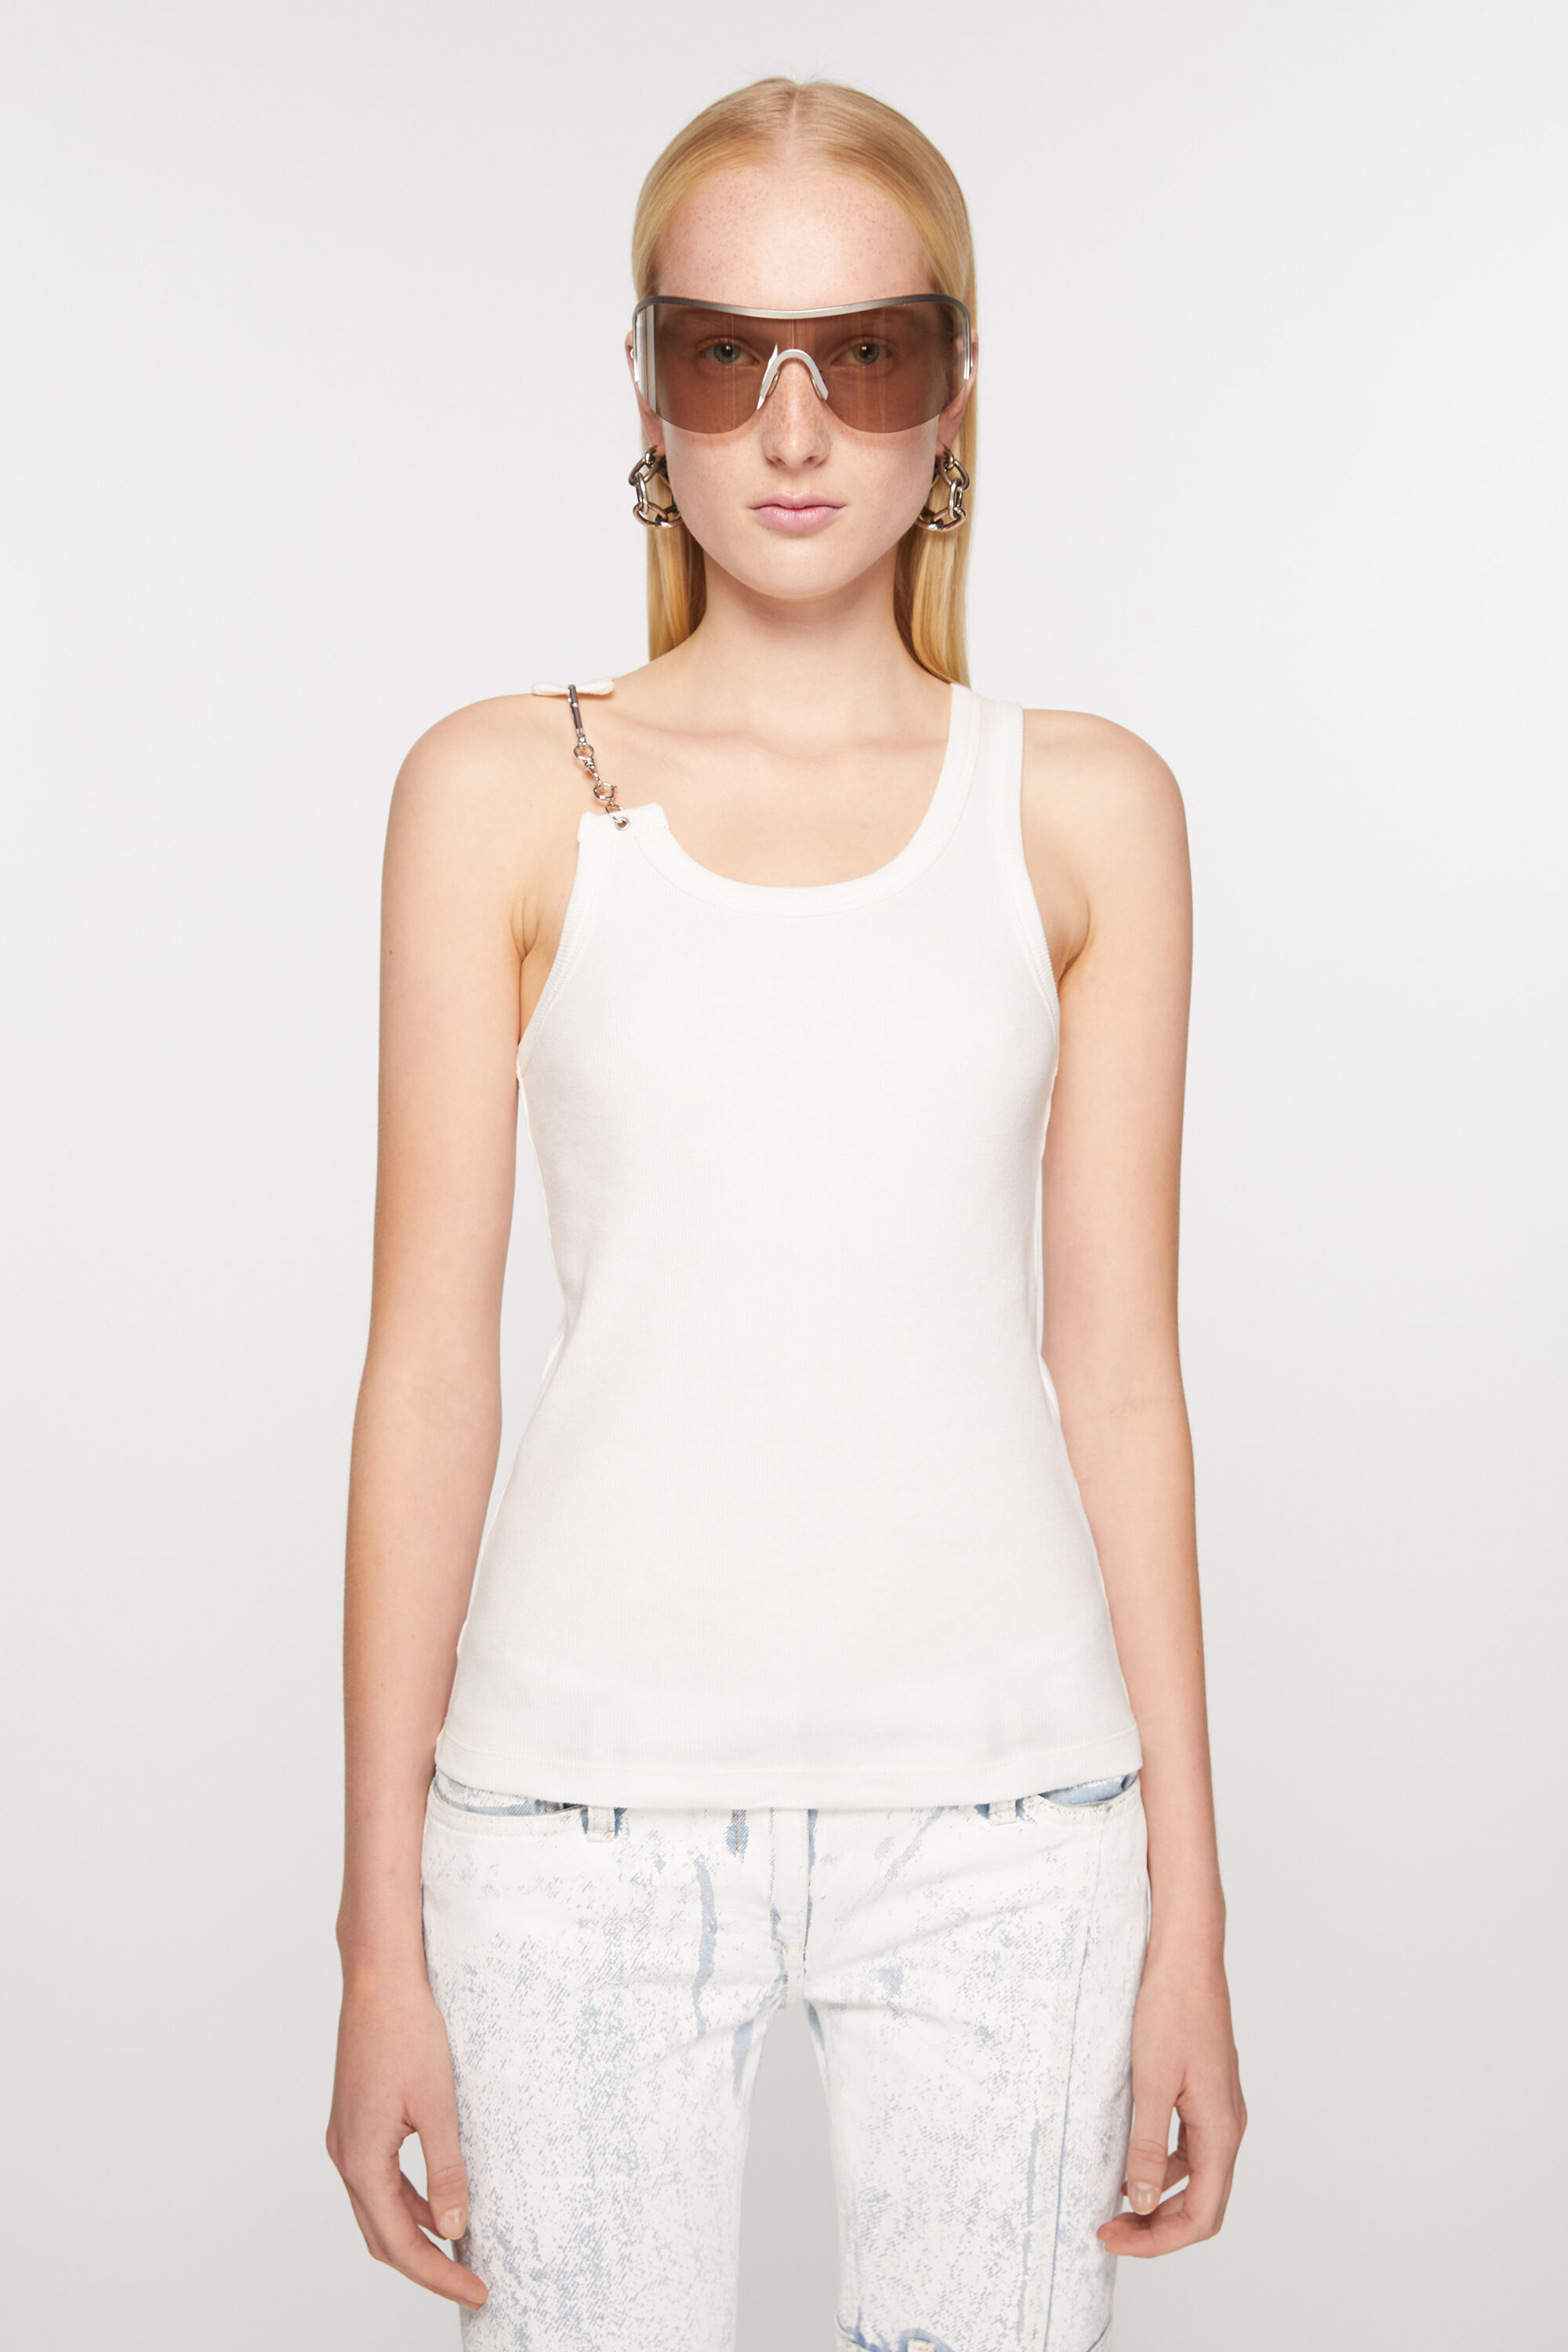 Acne Studios – Women's sleeveless t-shirts